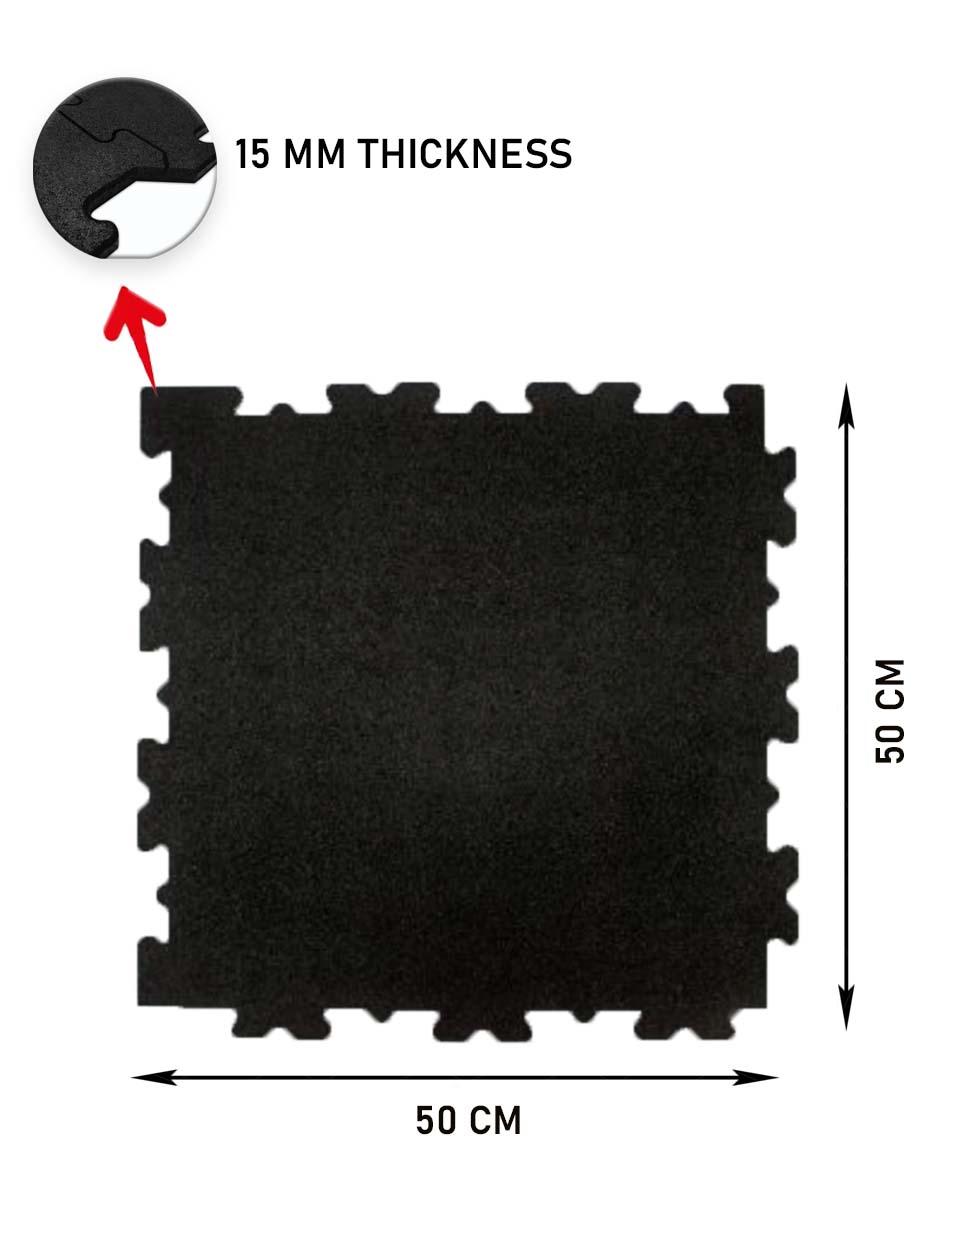 1441 Fitness Black Interlock Gym Flooring 50 cm x 50 cm - 15 mm Thickness